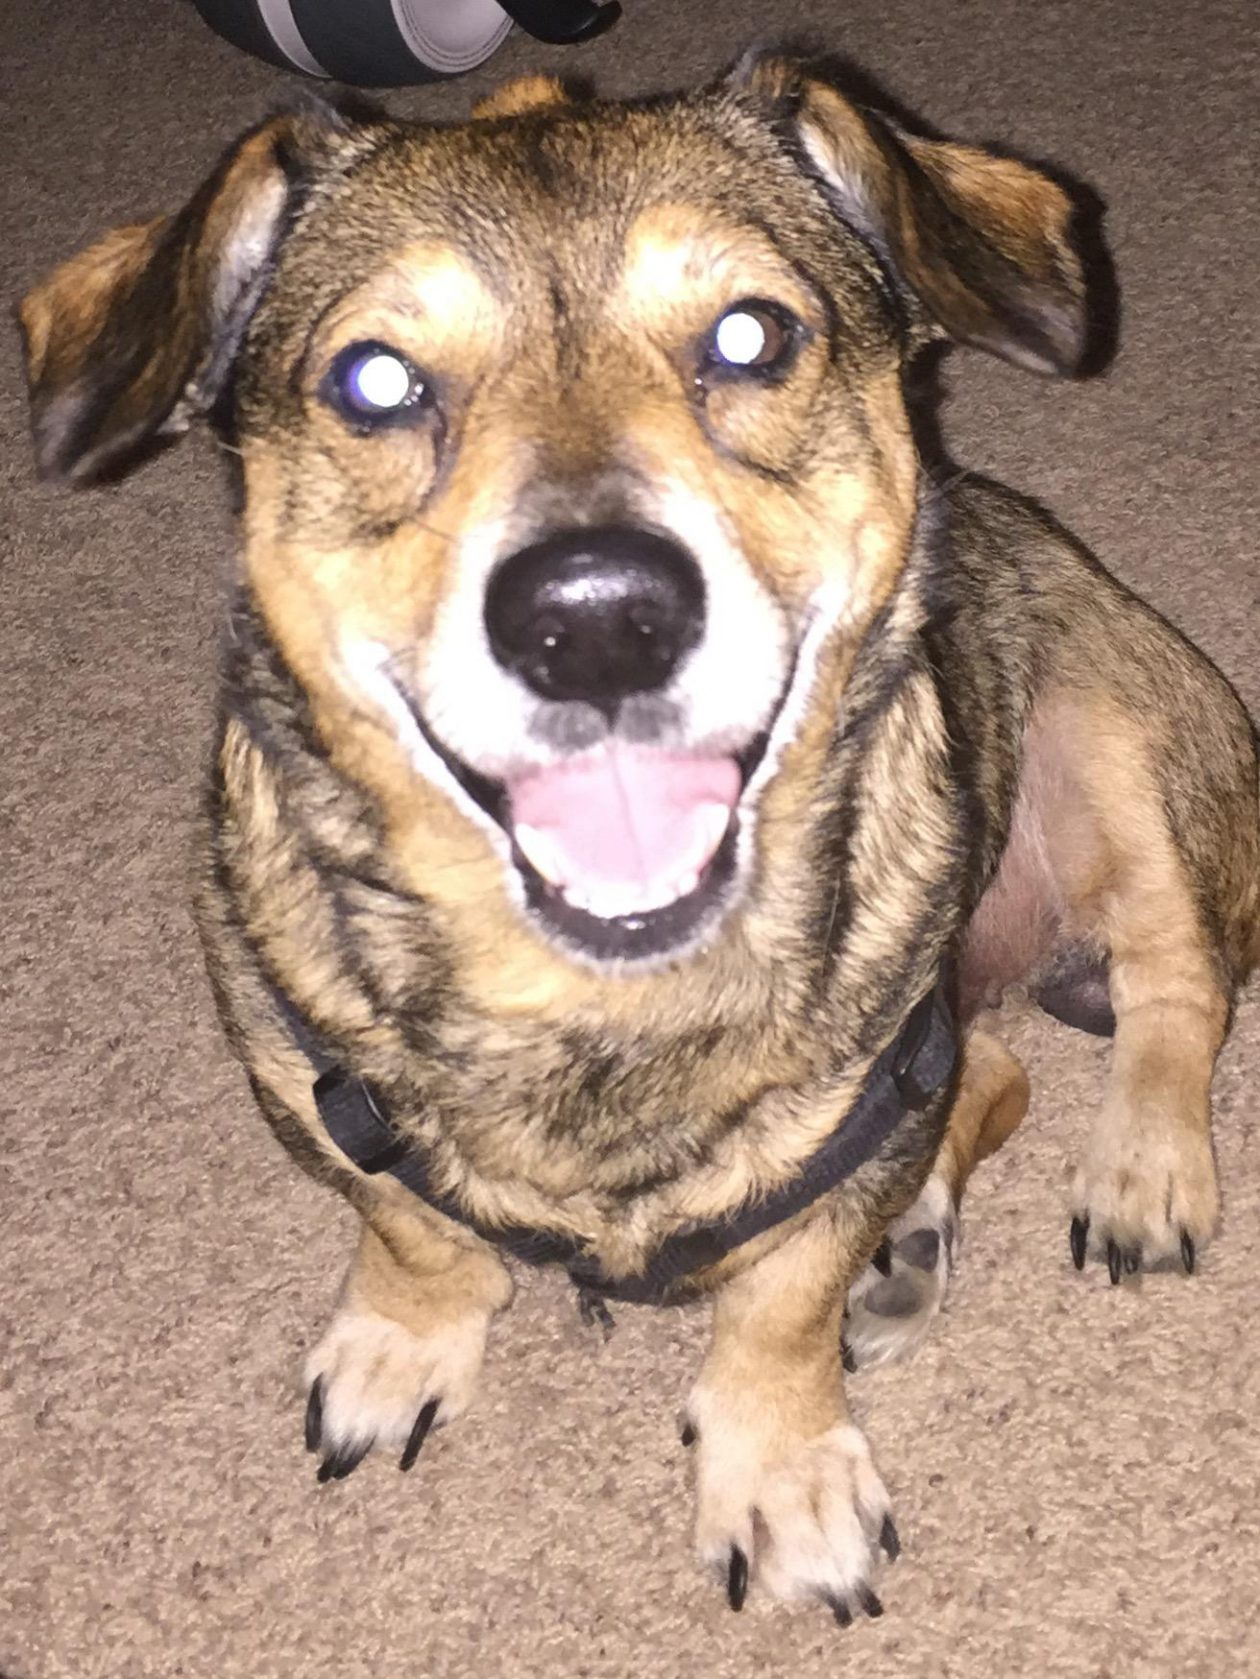 HelpFindBuddy-Missing Service Dog/Family Member-Reward Offered